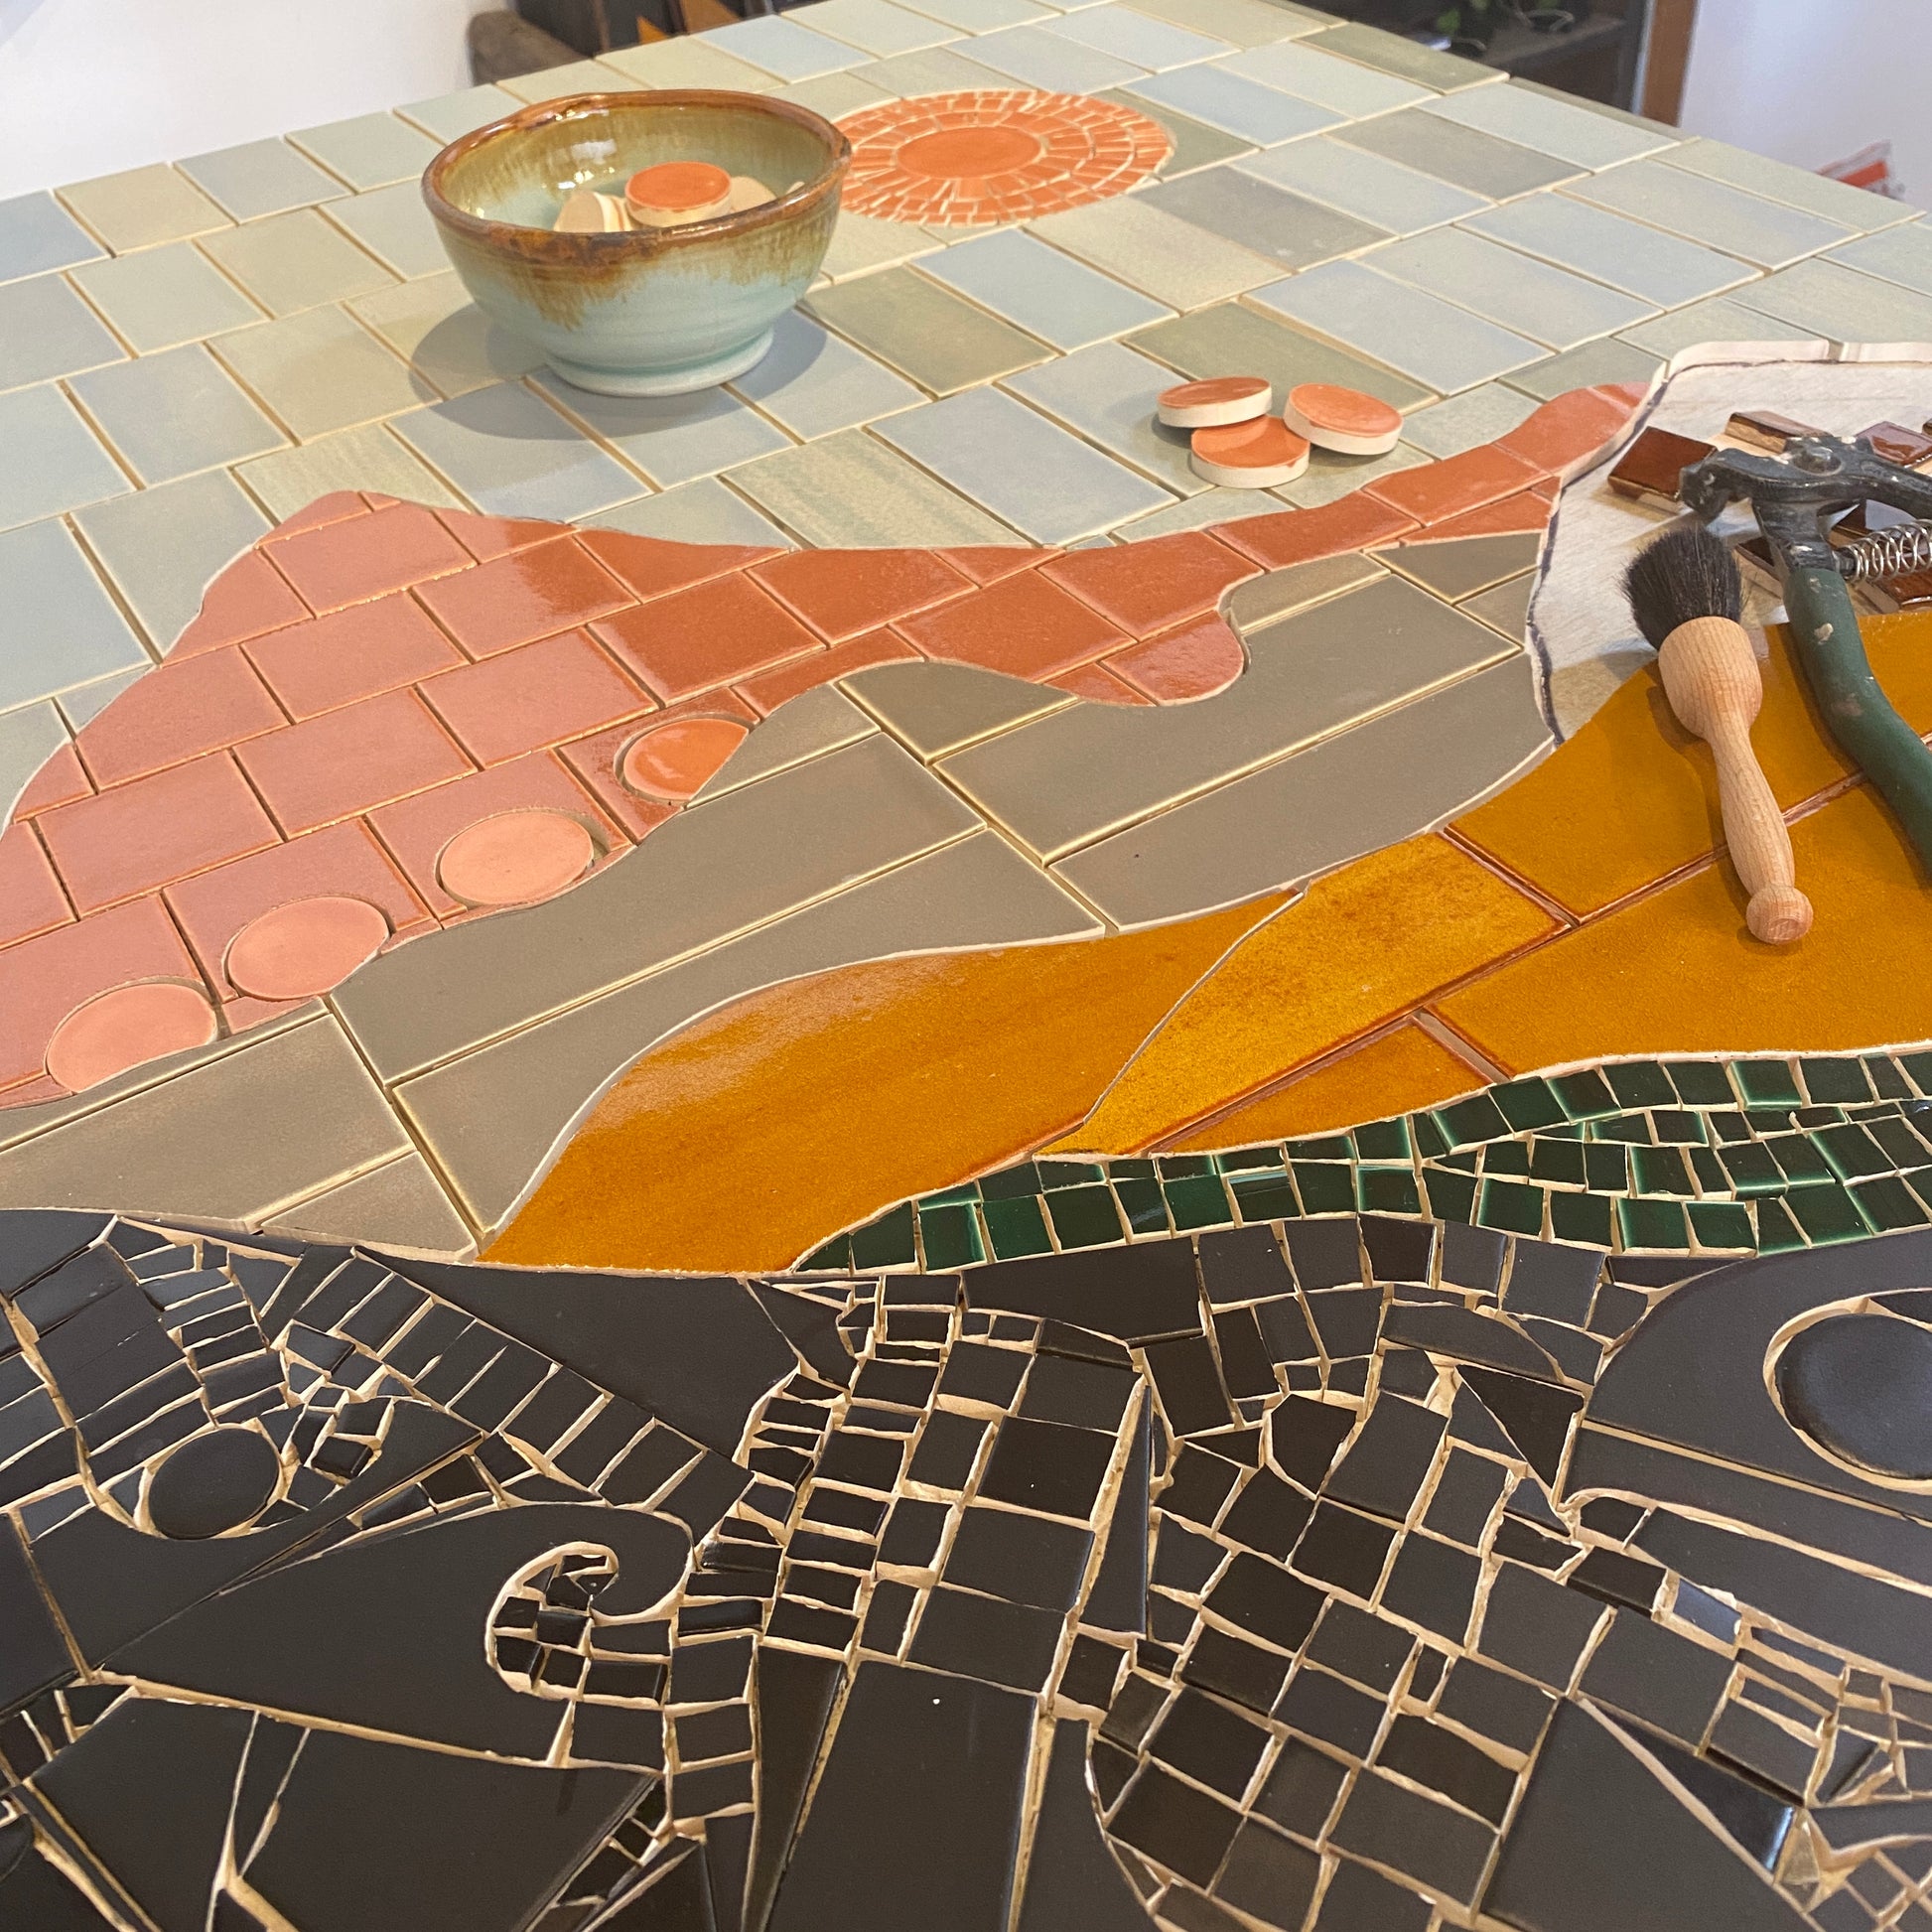 Dusty Sunstone Vista lanscape mosaic art in progress